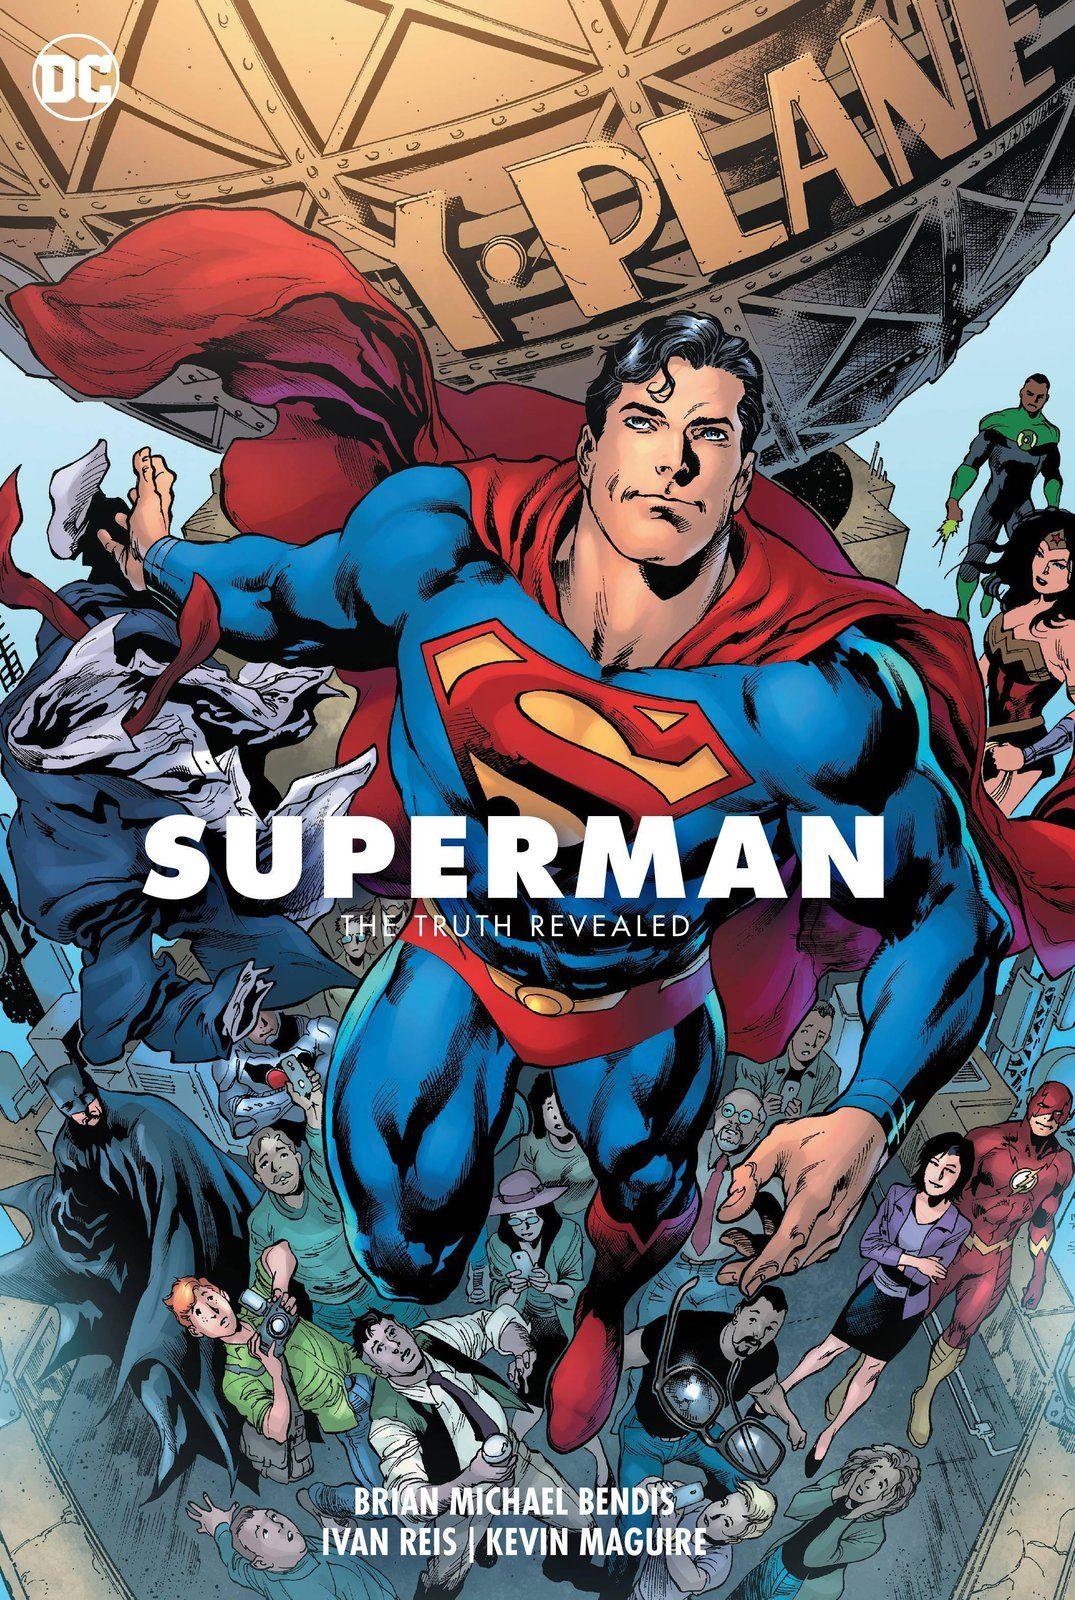 SUPERMAN VOL 03 THE TRUTH REVEALED (SHIPS 03-09-21) - PCKComics.com